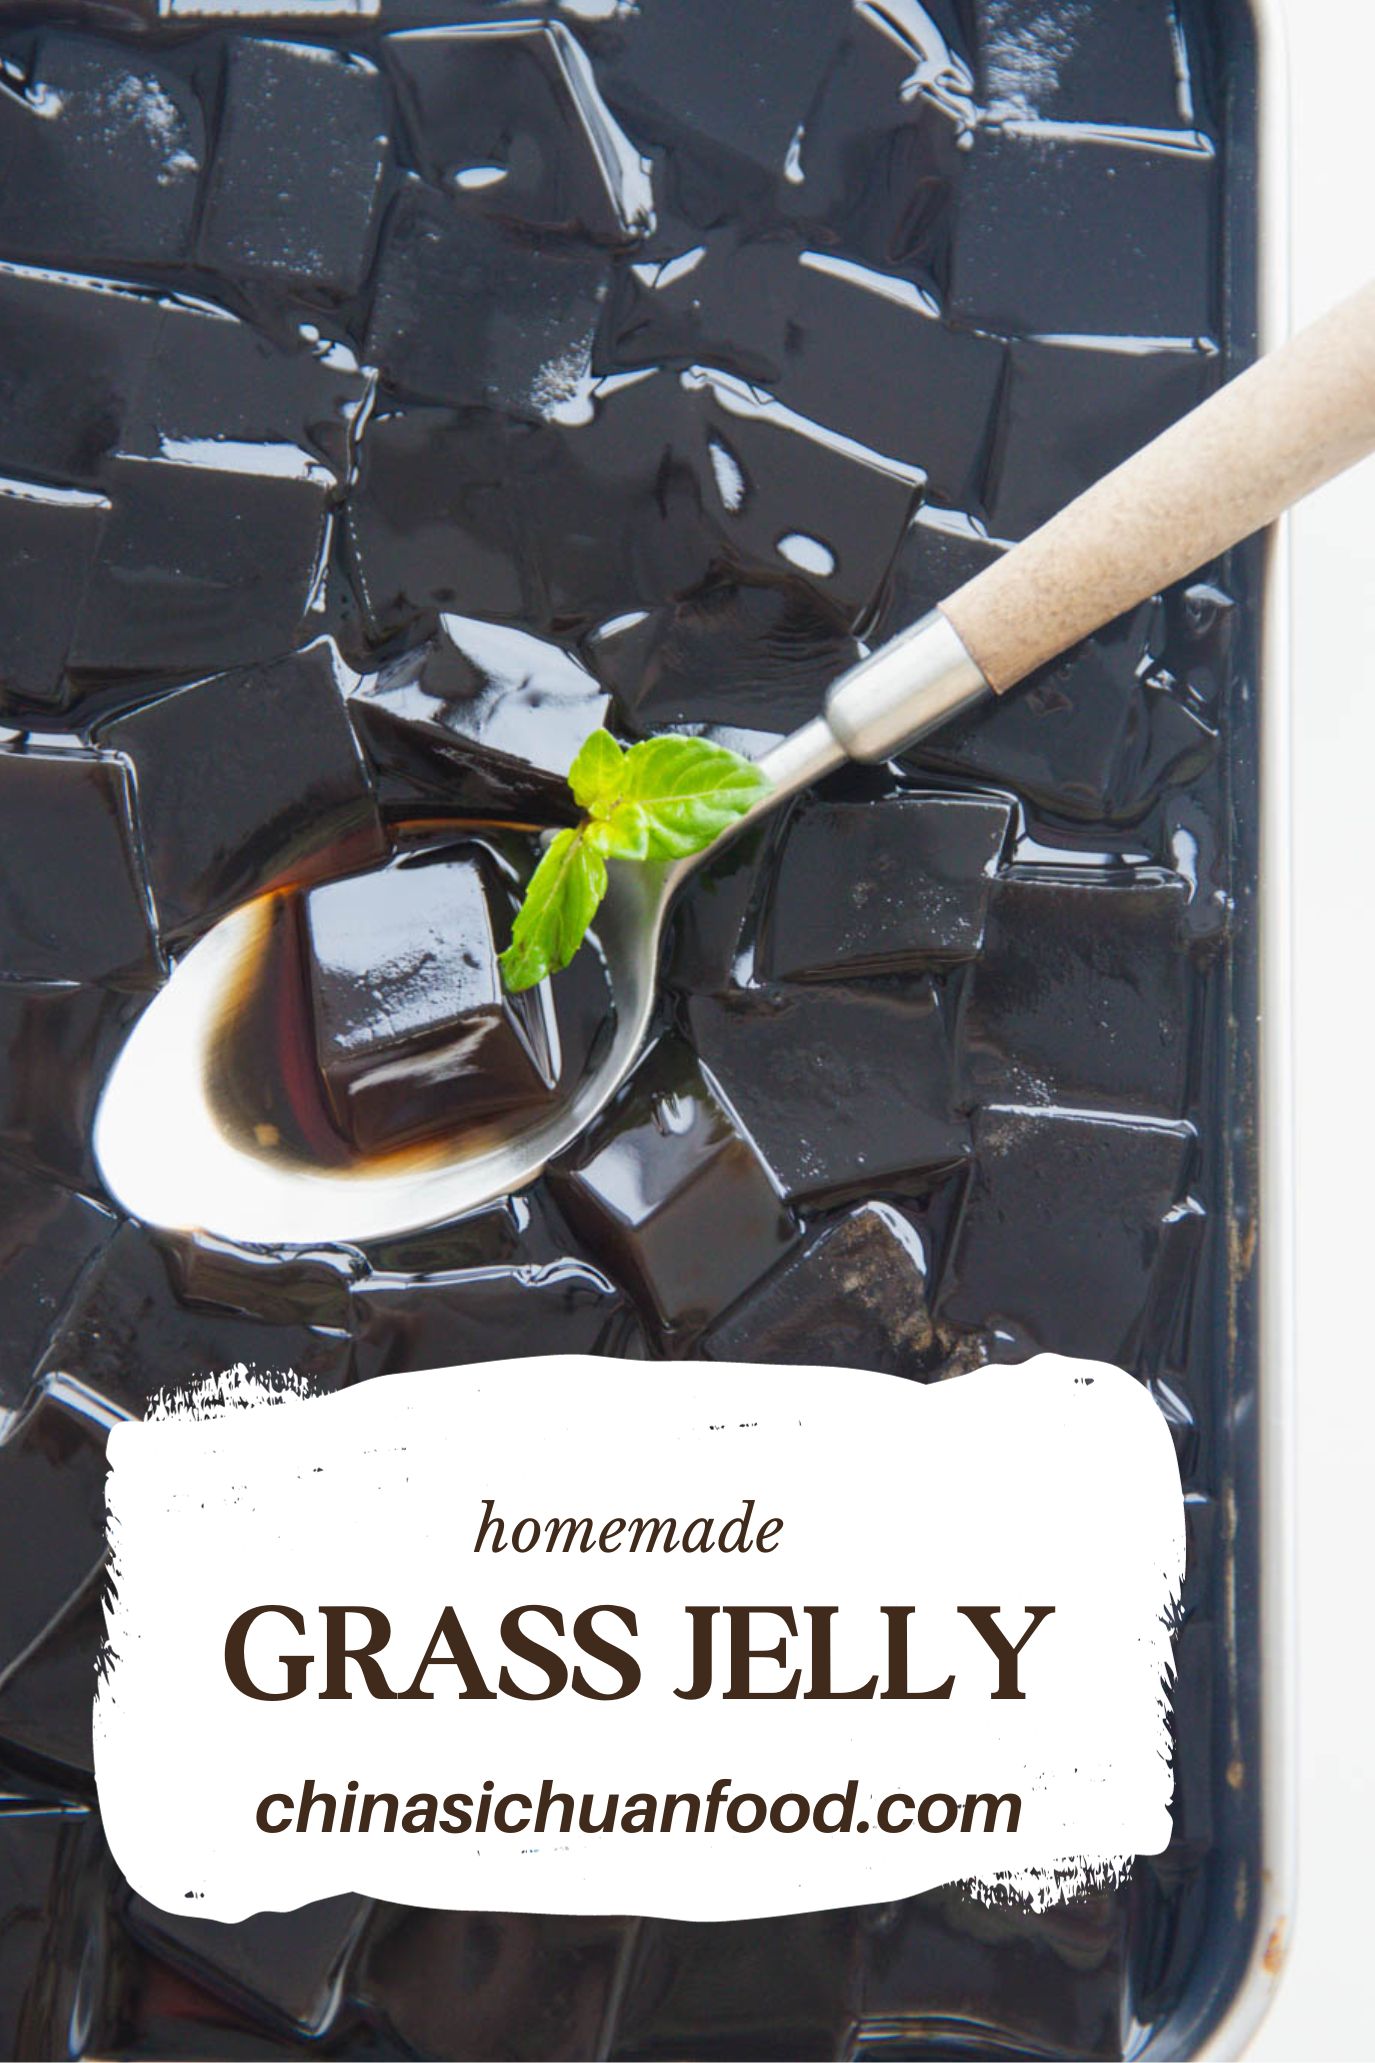 homemade grass jelly|chinasichuanfood.com